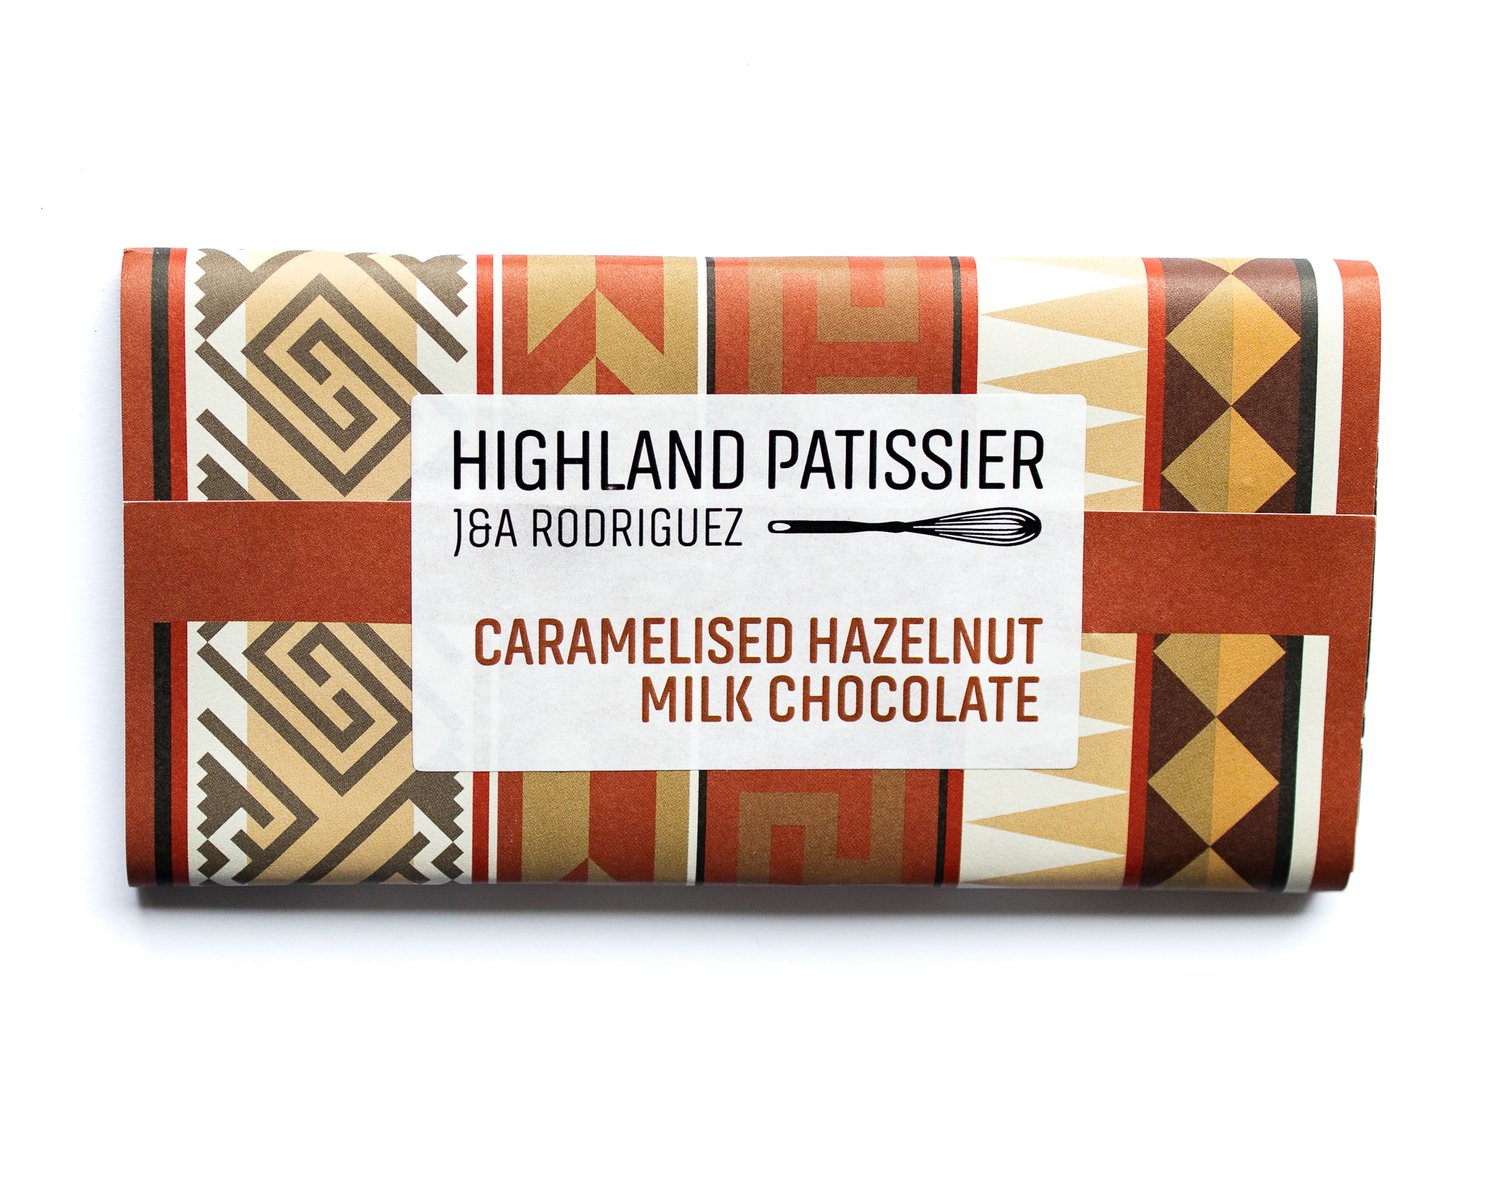 Caramelised Hazelnut Milk Chocolate